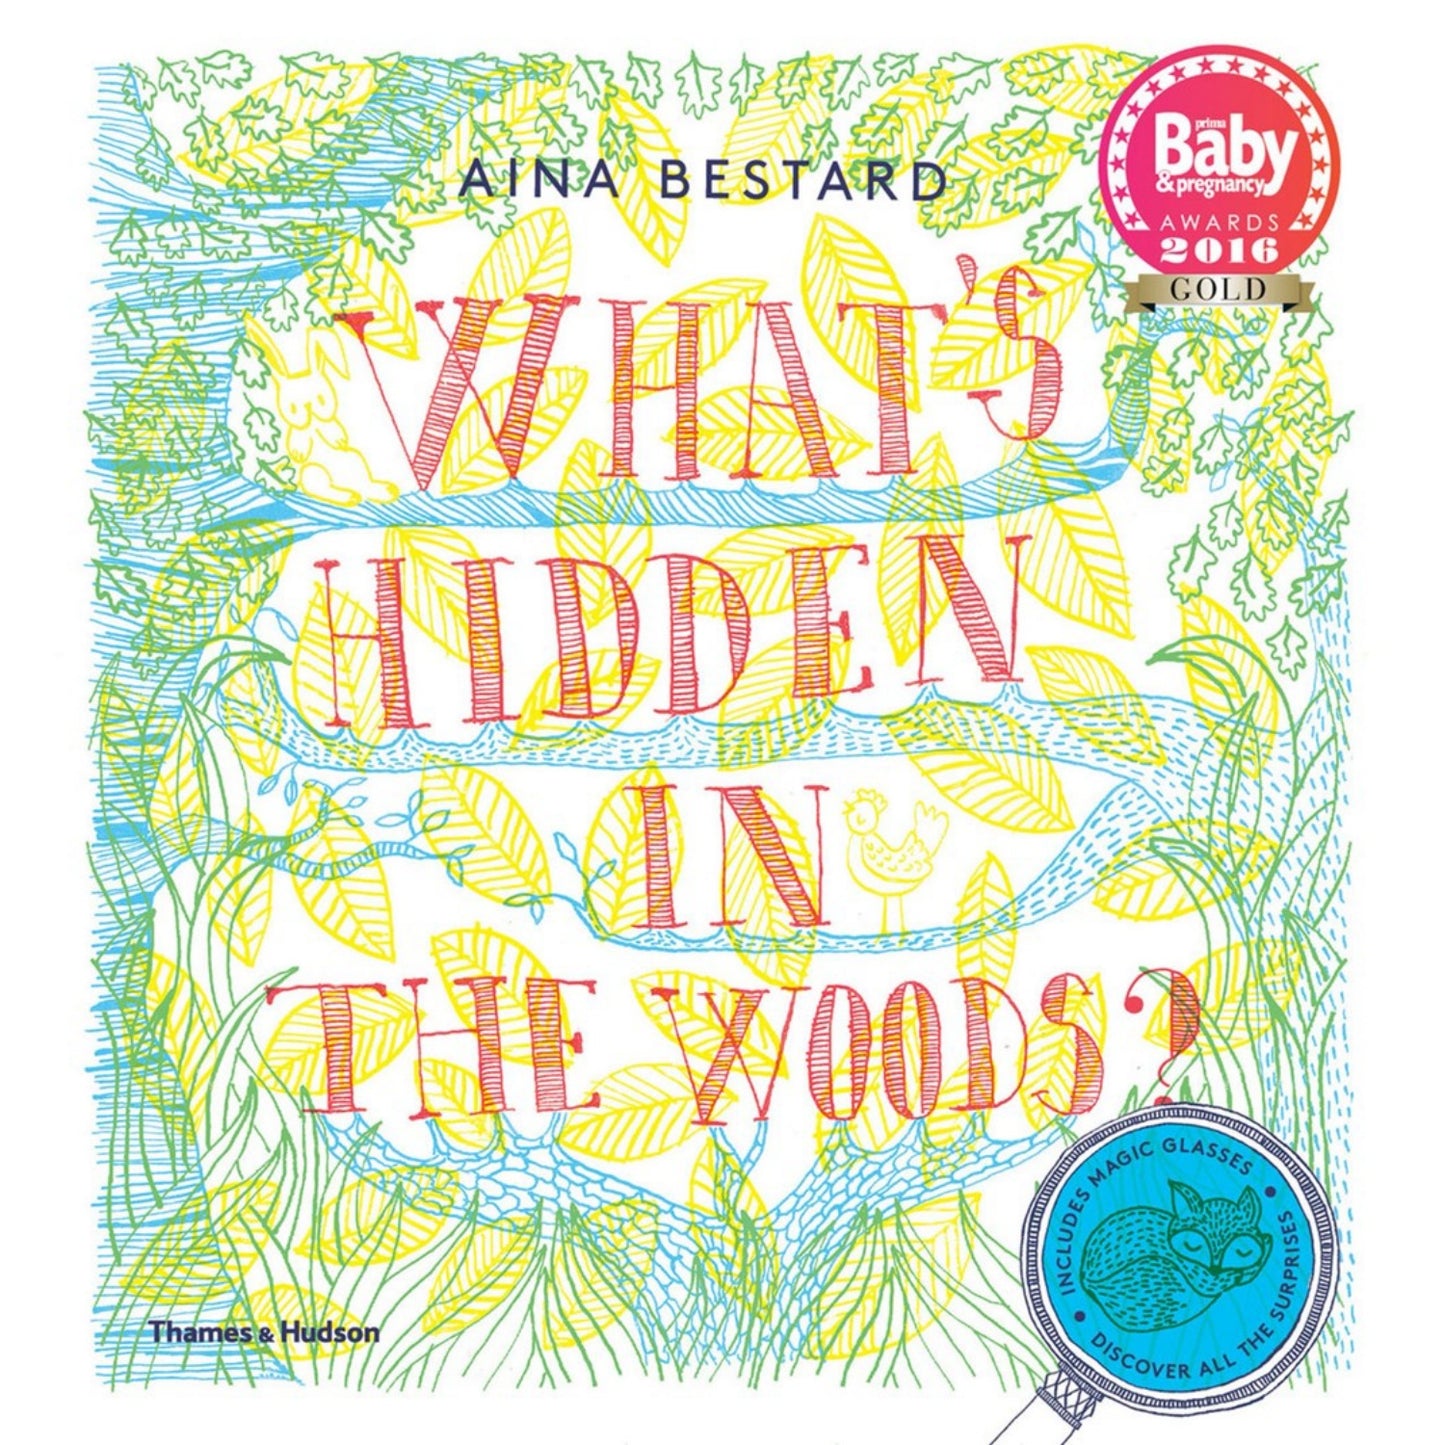 What's Hidden in the Woods? | Children's Activity Book on Nature